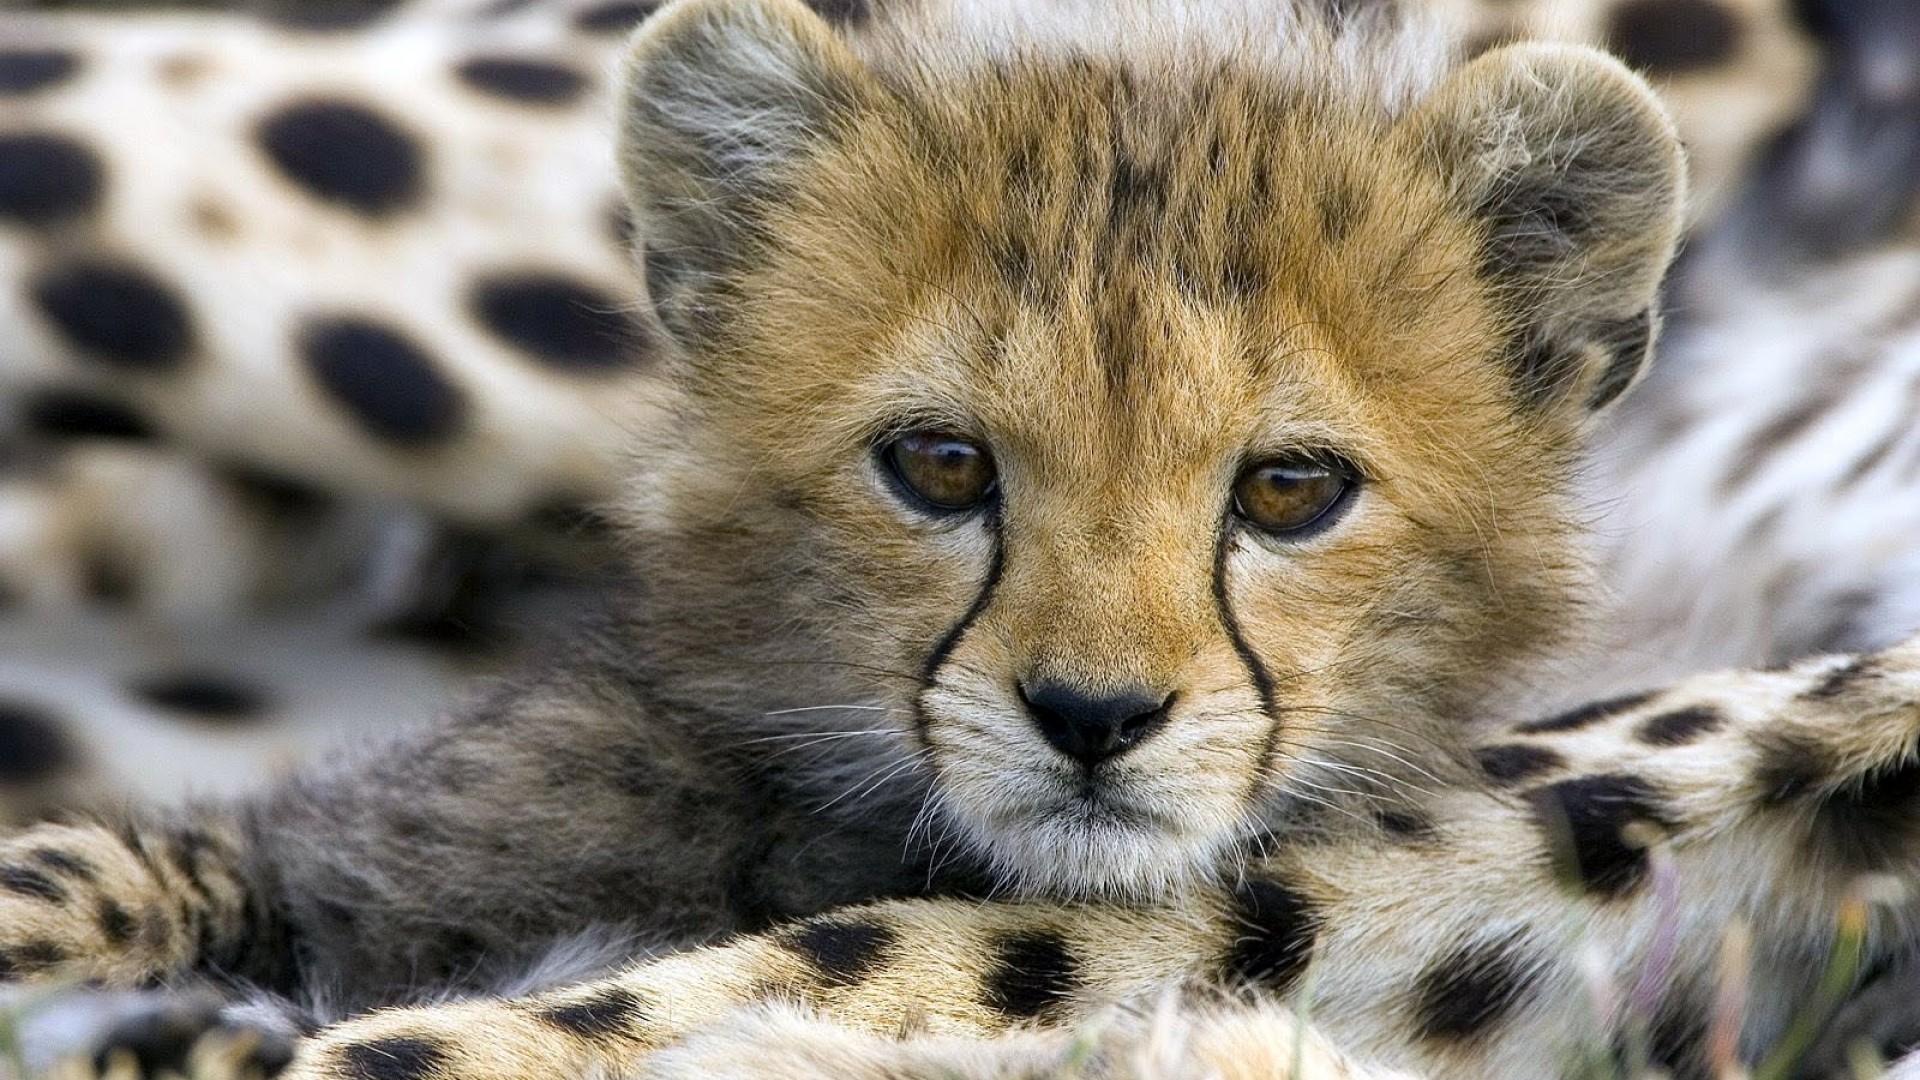 cheetah images free download